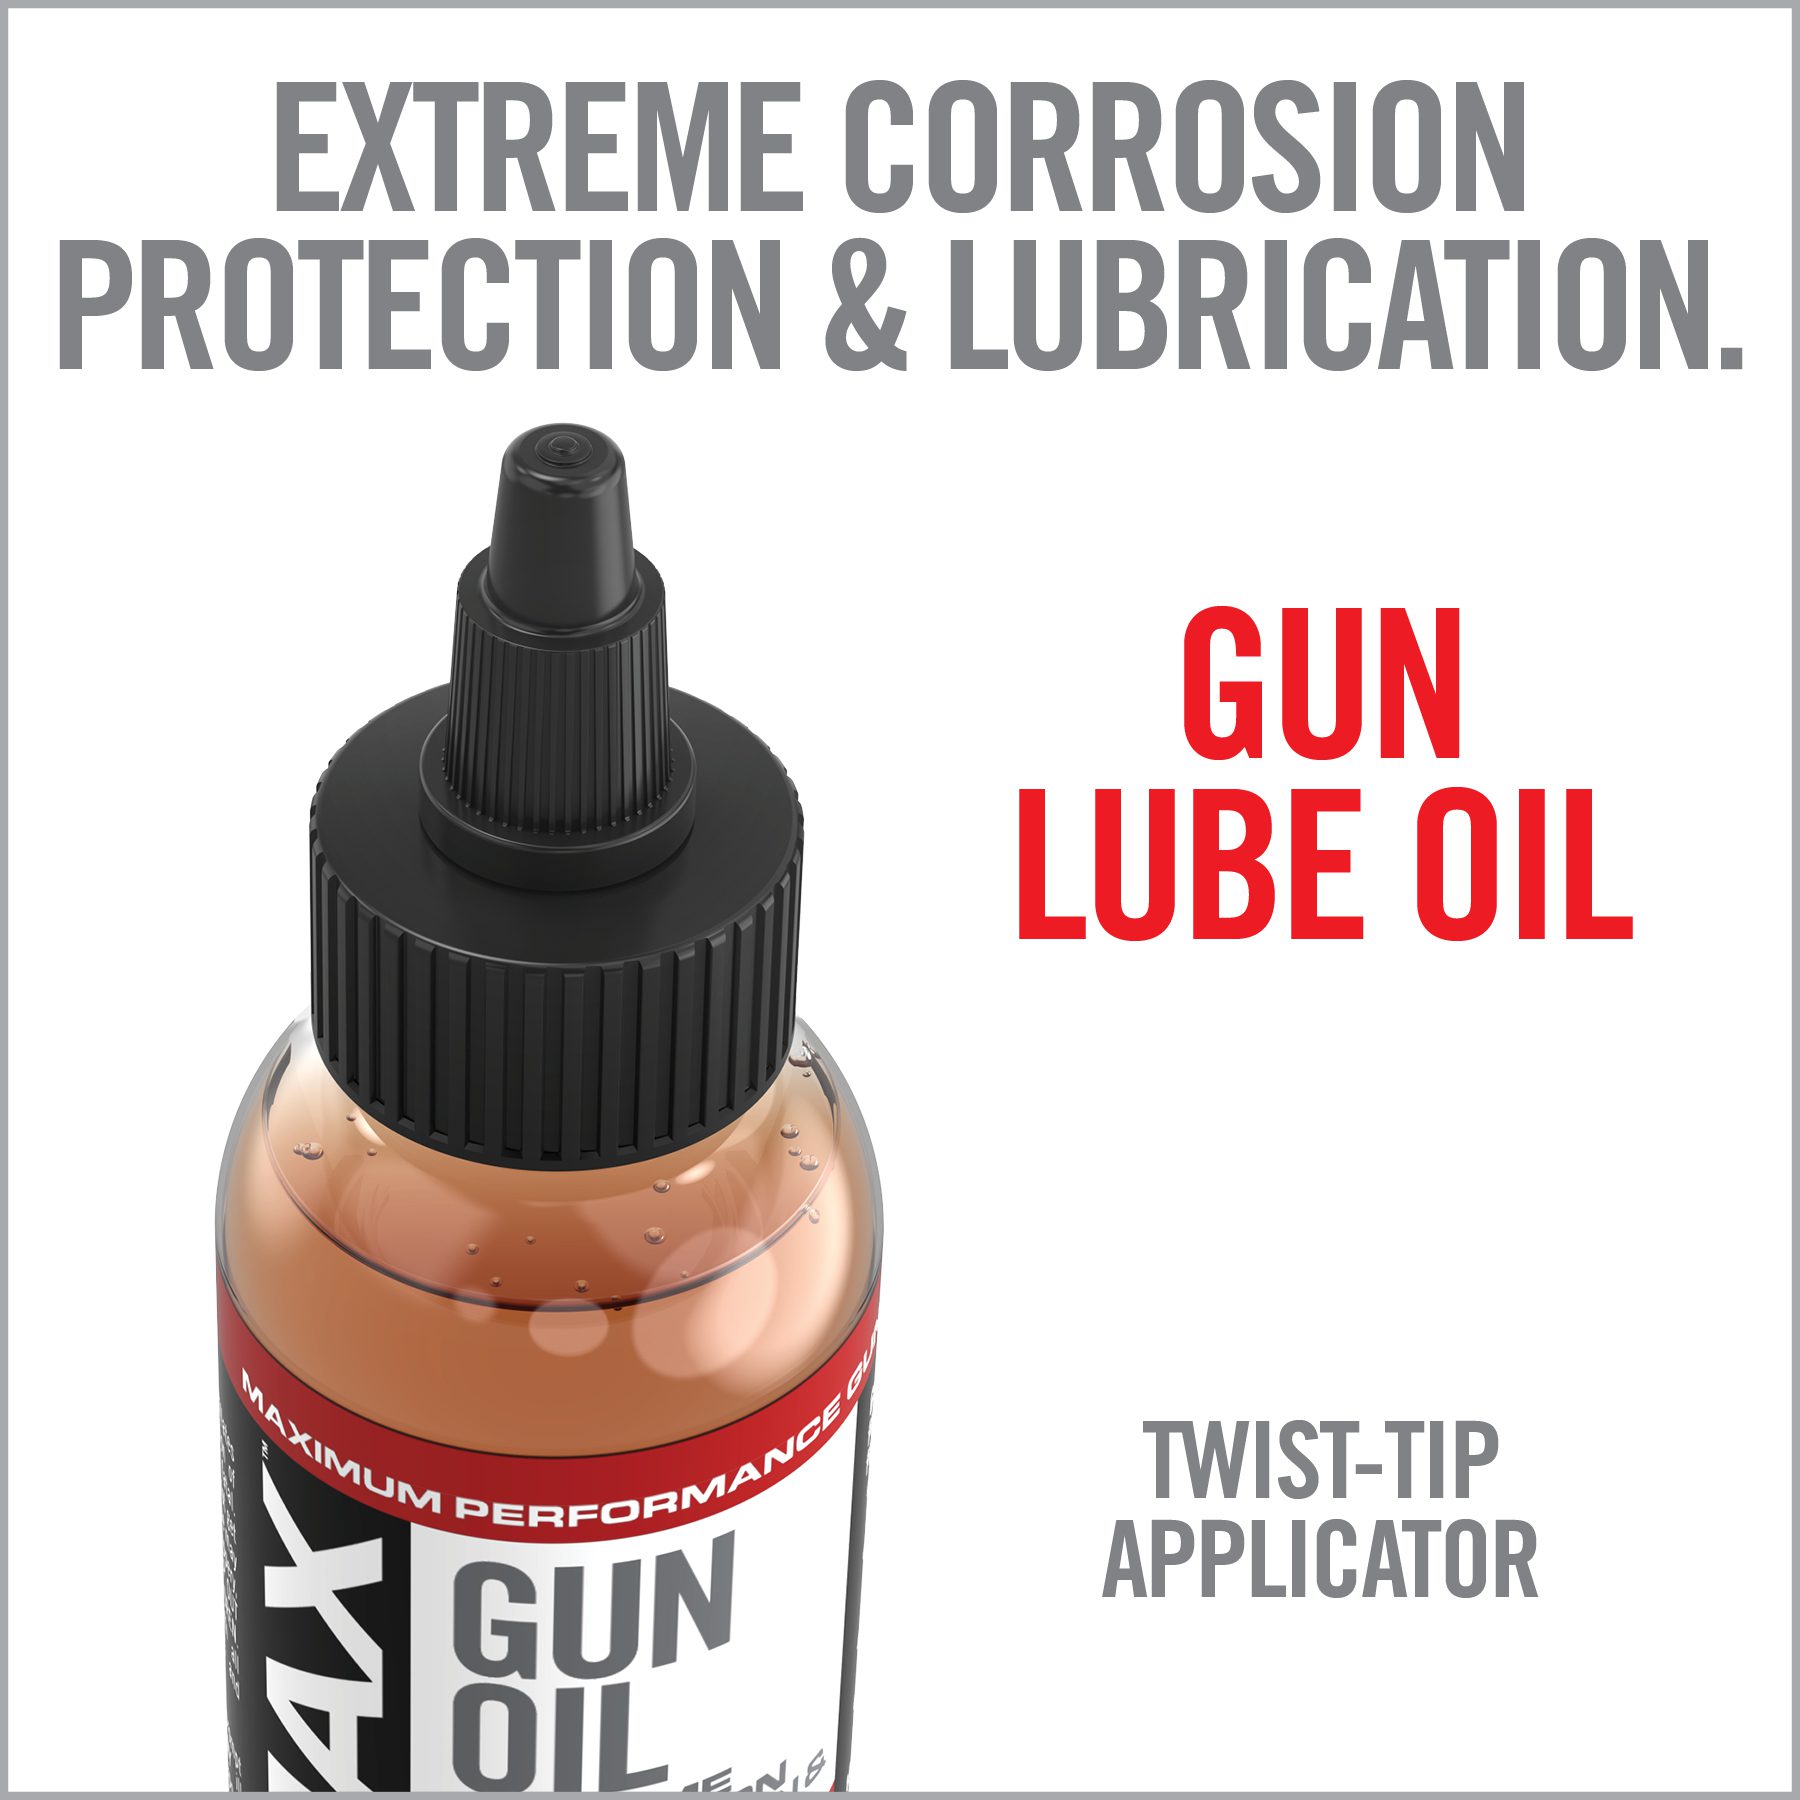 a bottle of gun lube oil next to an advertisement